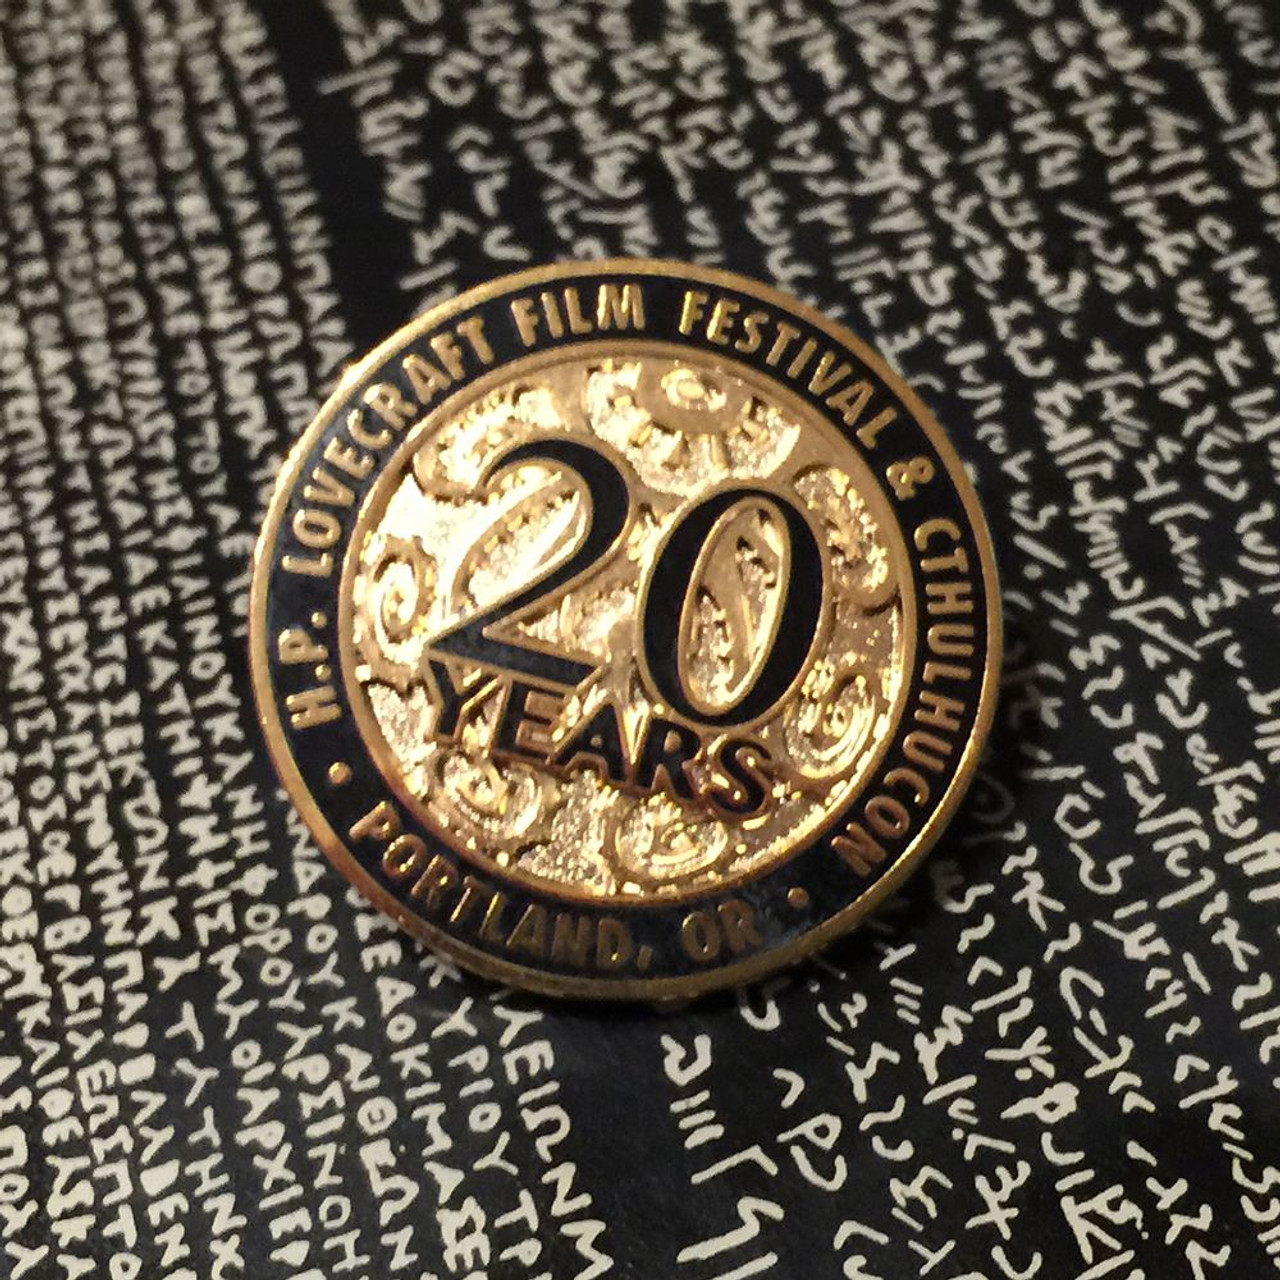 Hp Lovecraft Film Festival 20th Anniversary Pin Arkham Bazaar